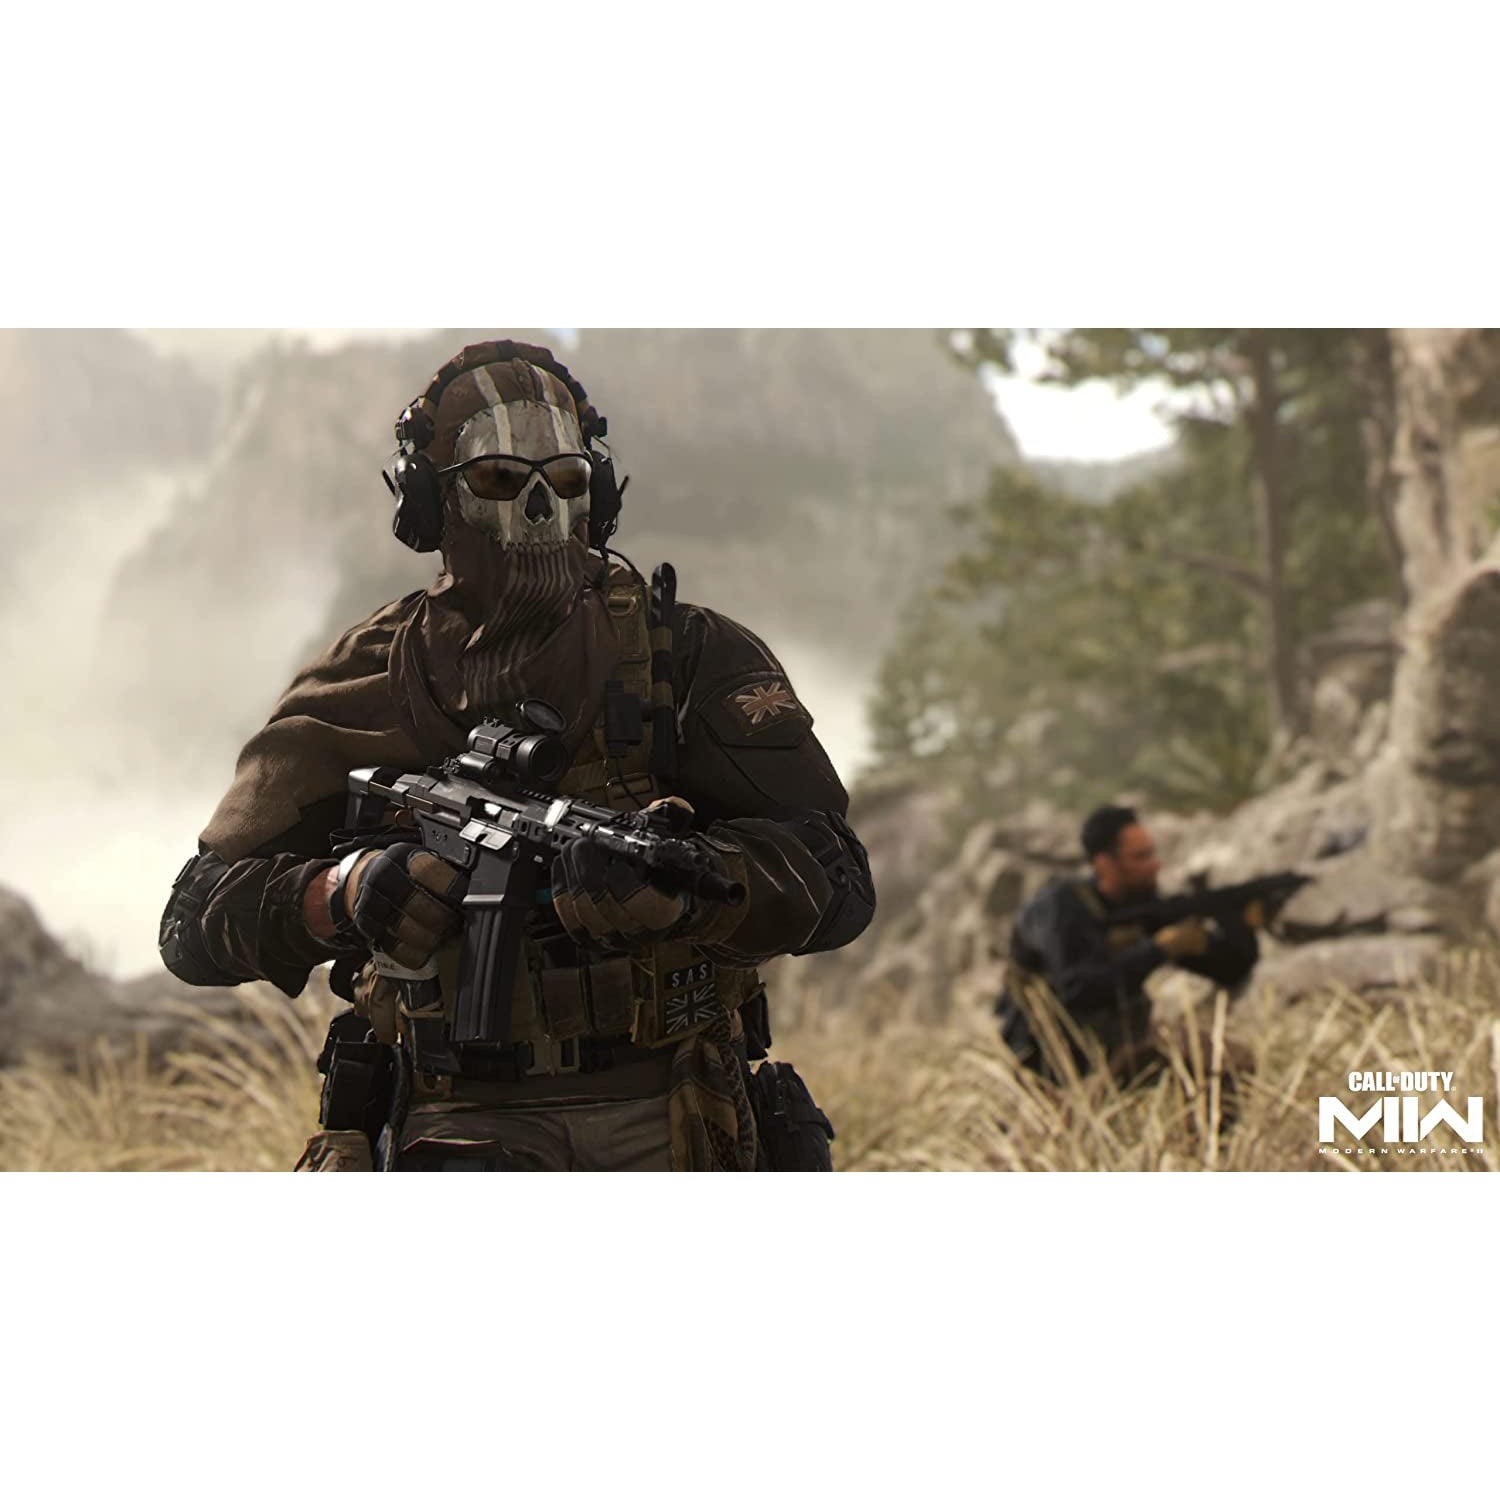 Call of Duty: Modern Warfare 2 Cross-Gen Edition (Xbox One & Series X) - Good